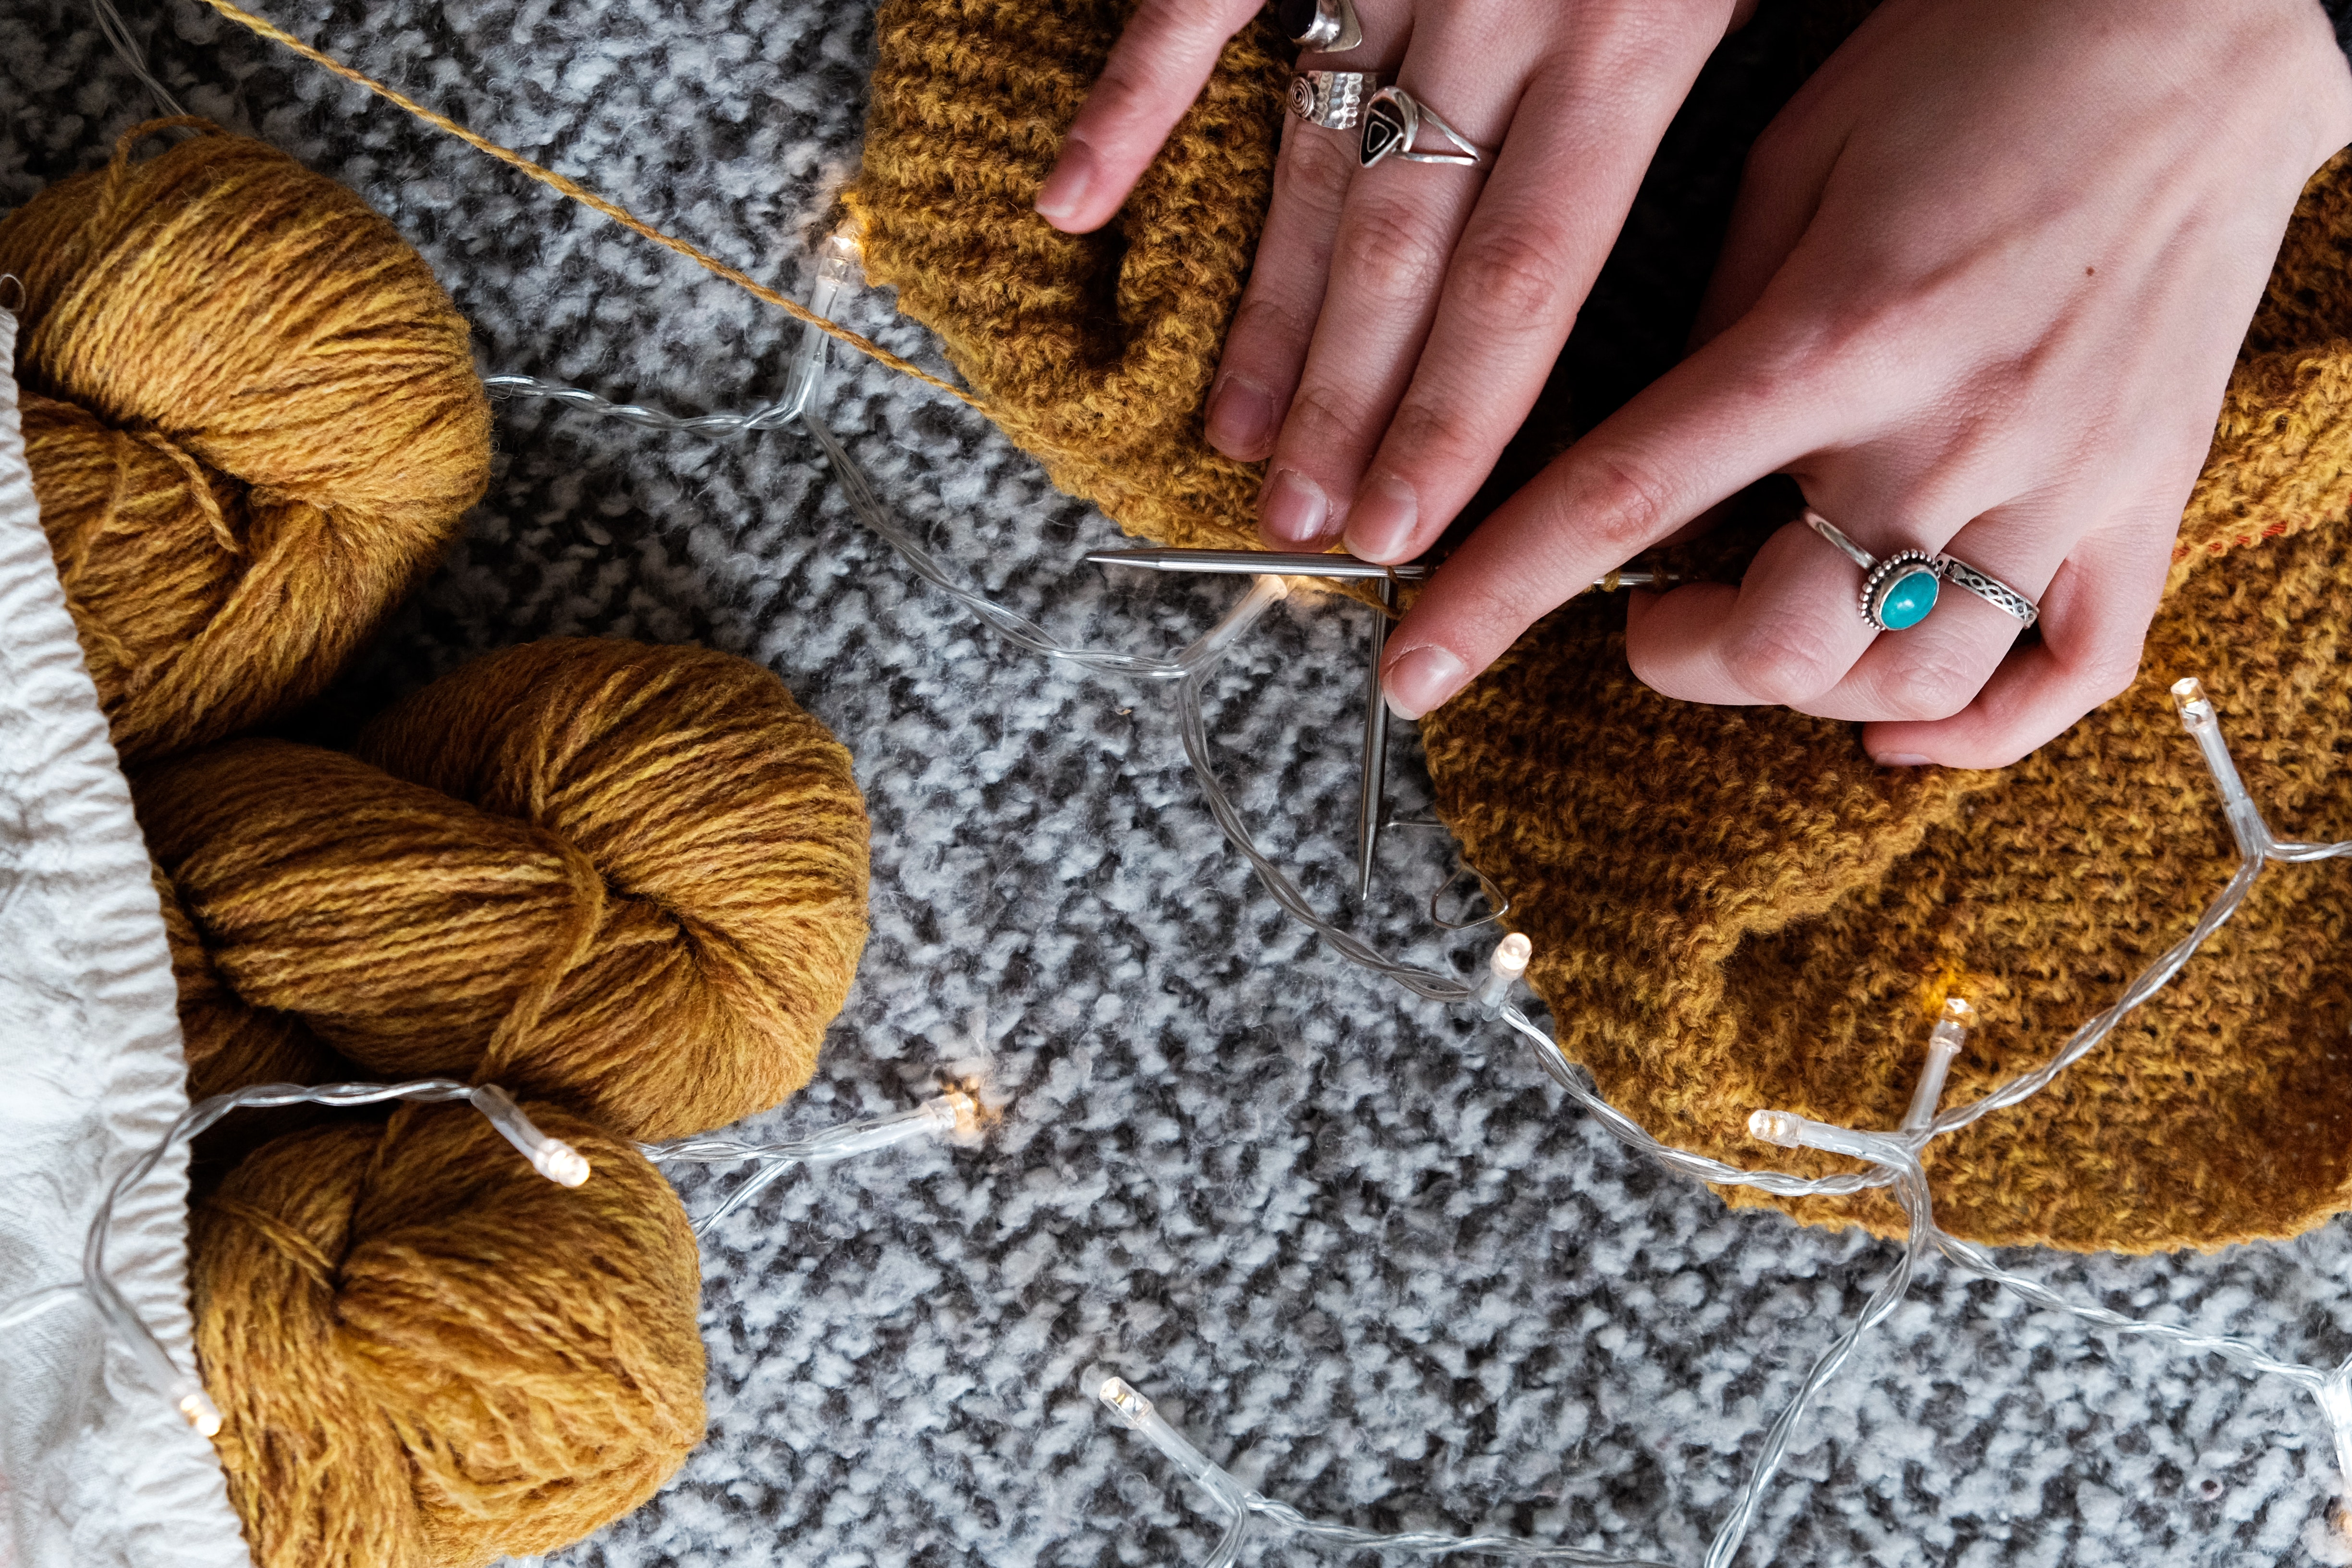 Hands with knitting needles, knitting mustard-yellow and gray yarn.